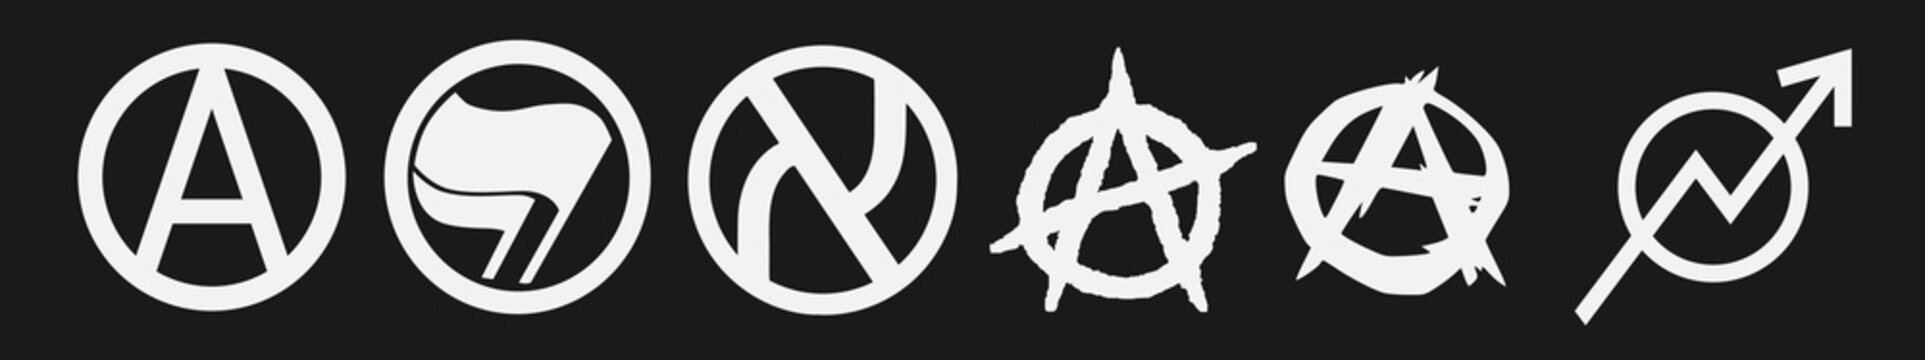 Anarchists Symbols Vector / Ai Illustrator